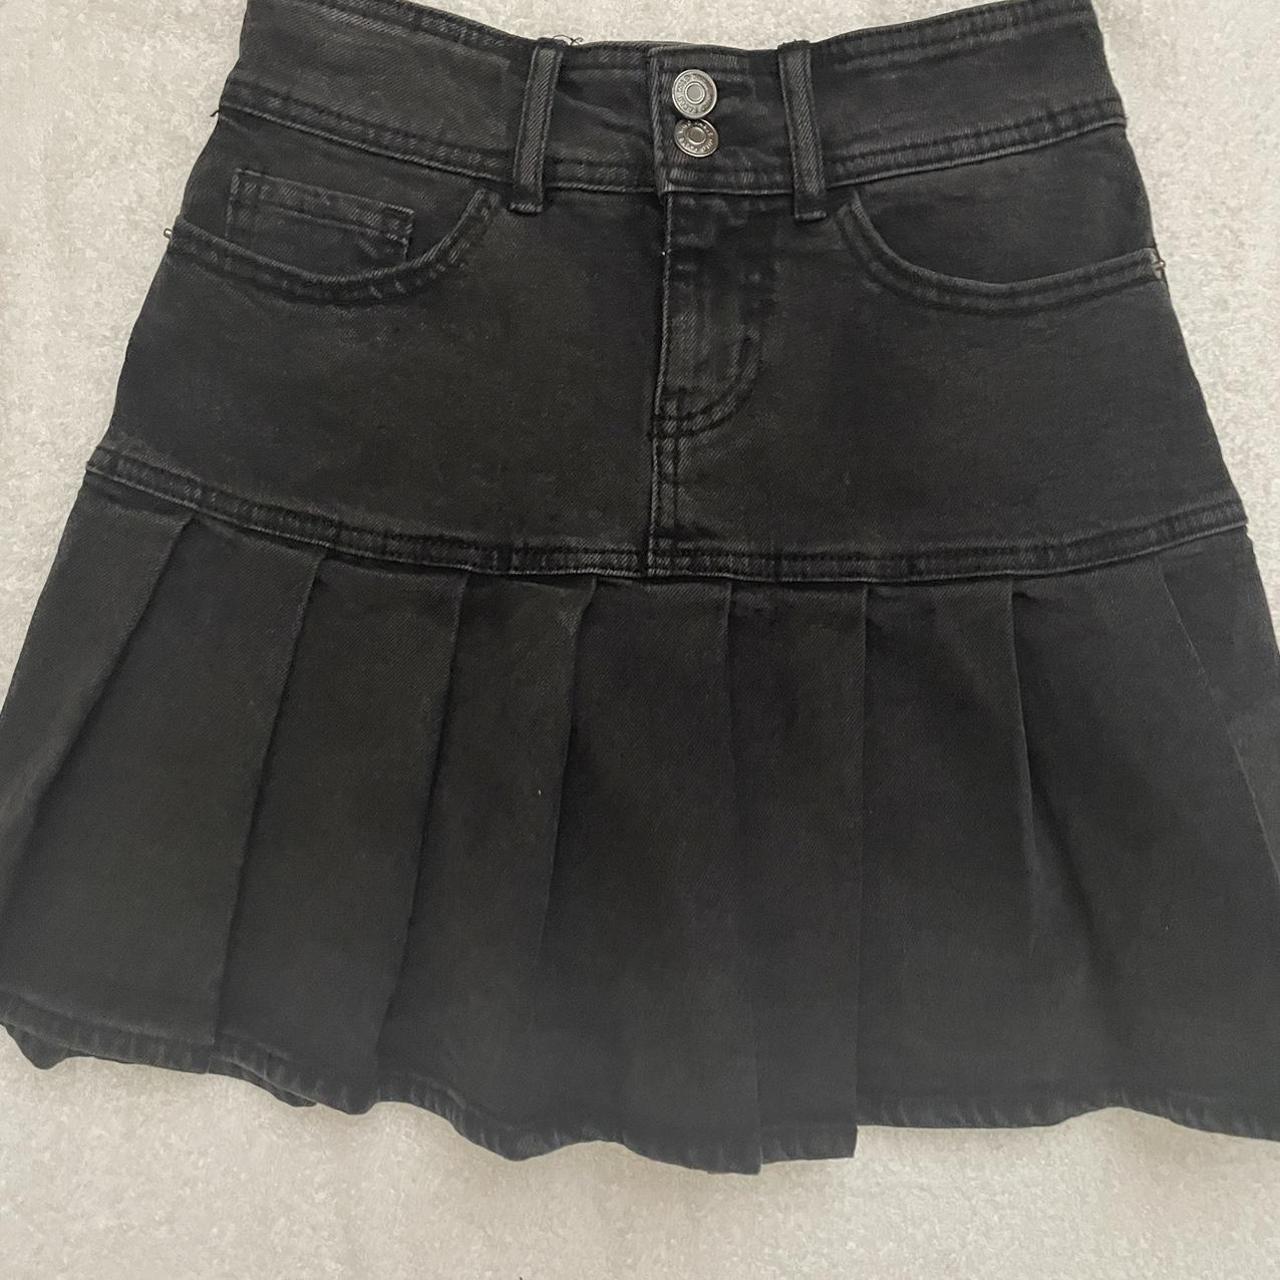 Wild fable black pleated skirt - Depop